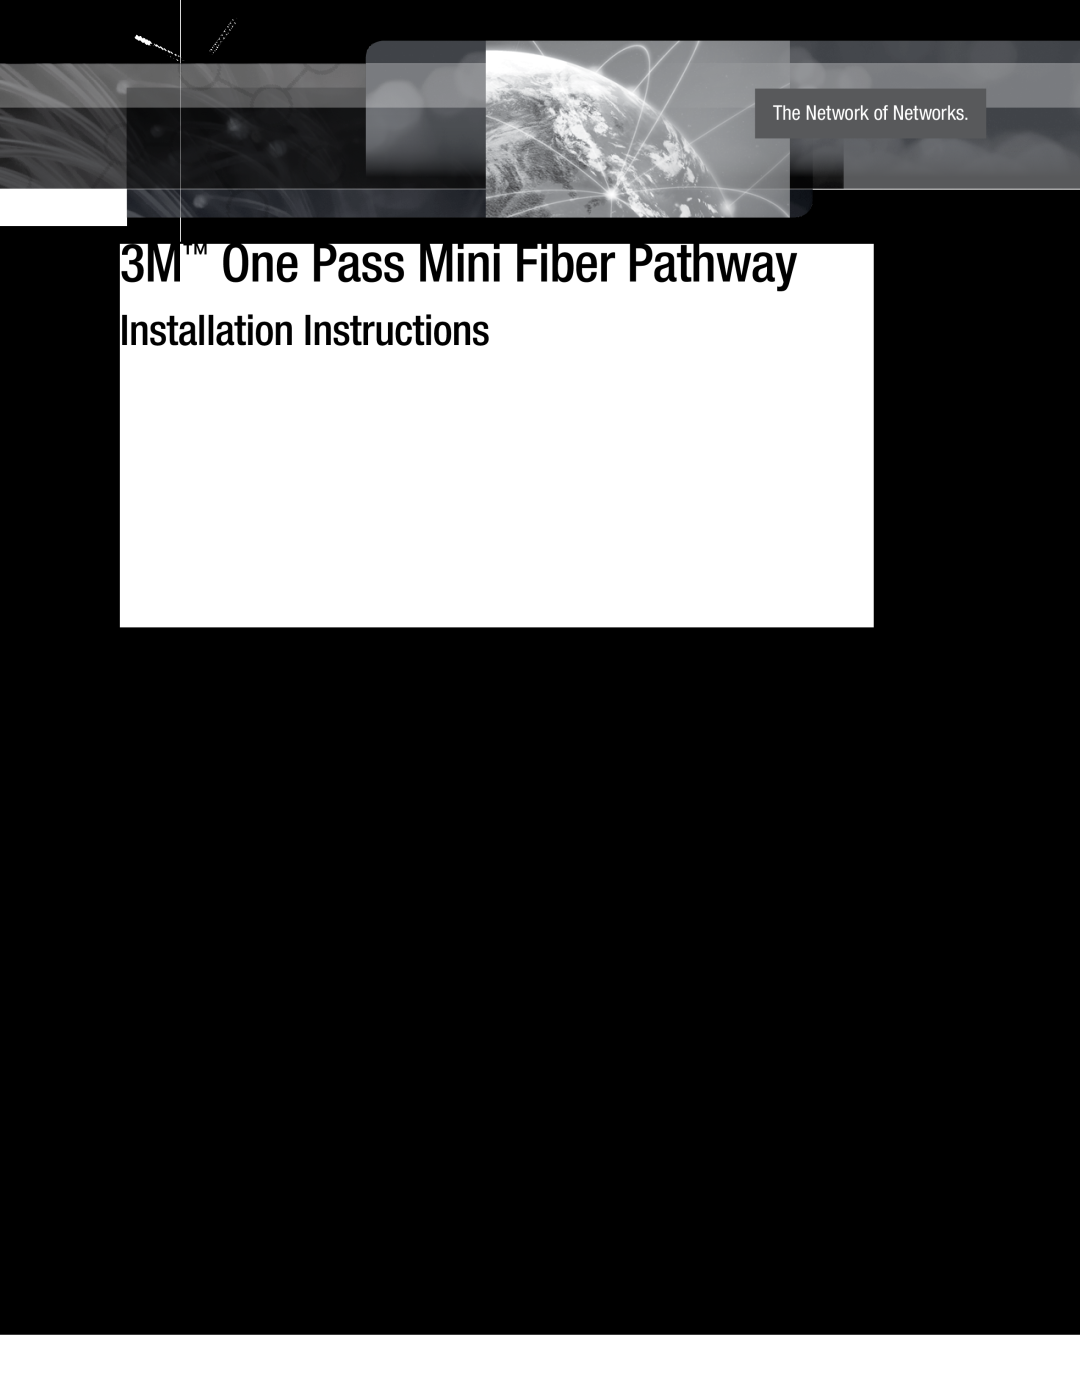 3M 78-0013-4441-1-D installation instructions 3M One Pass Mini Fiber Pathway, Installation Instructions, December 